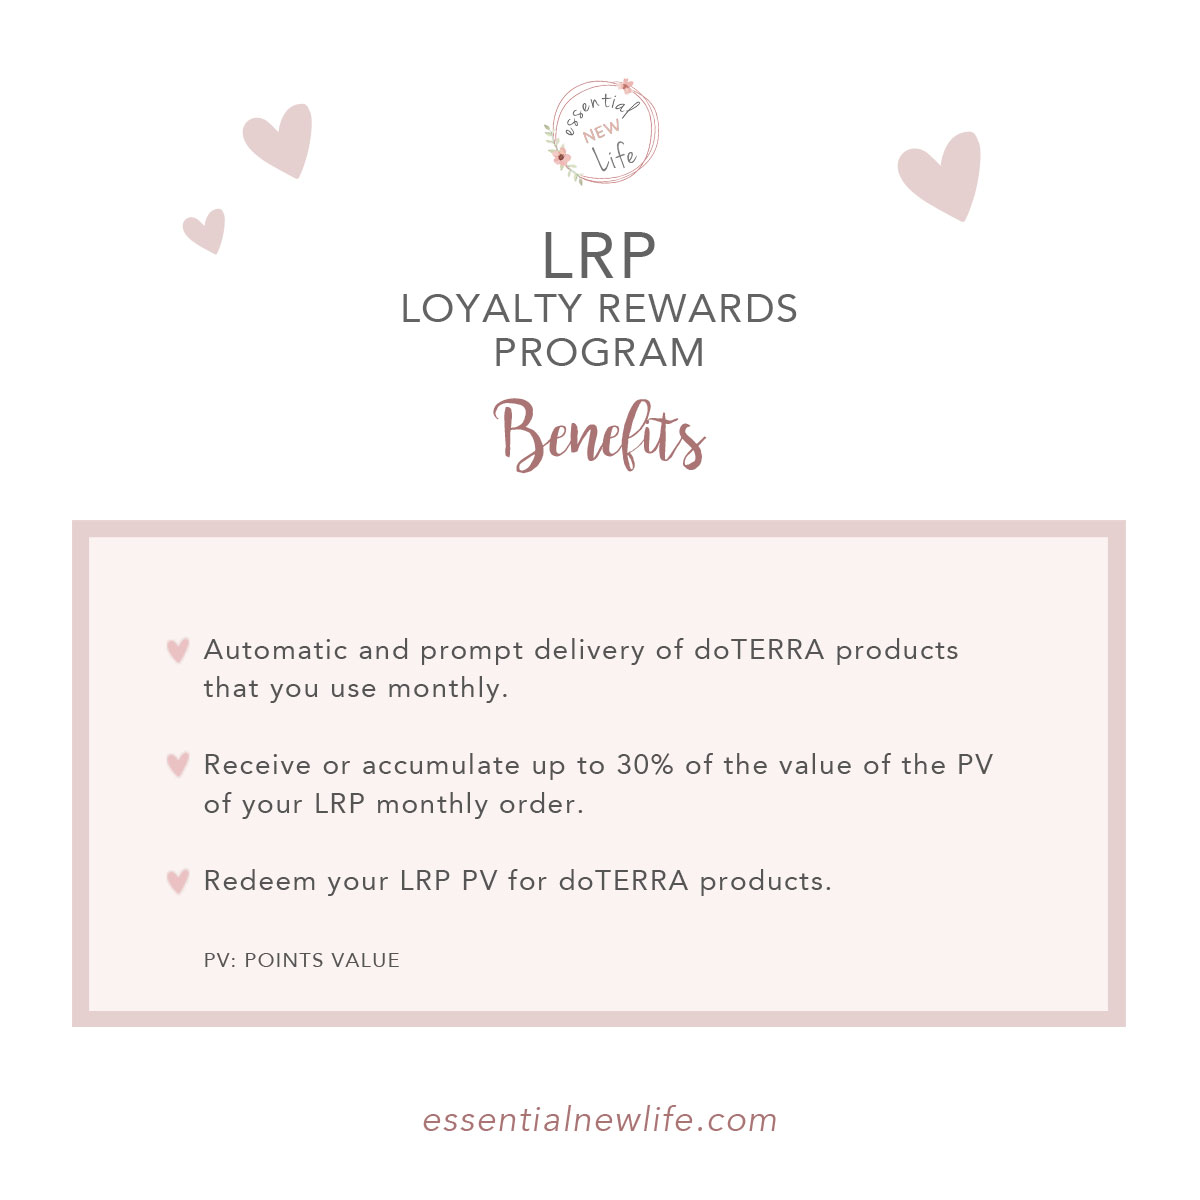 Essential New Life | Loyalty Rewards Program (LRP) - Benefits